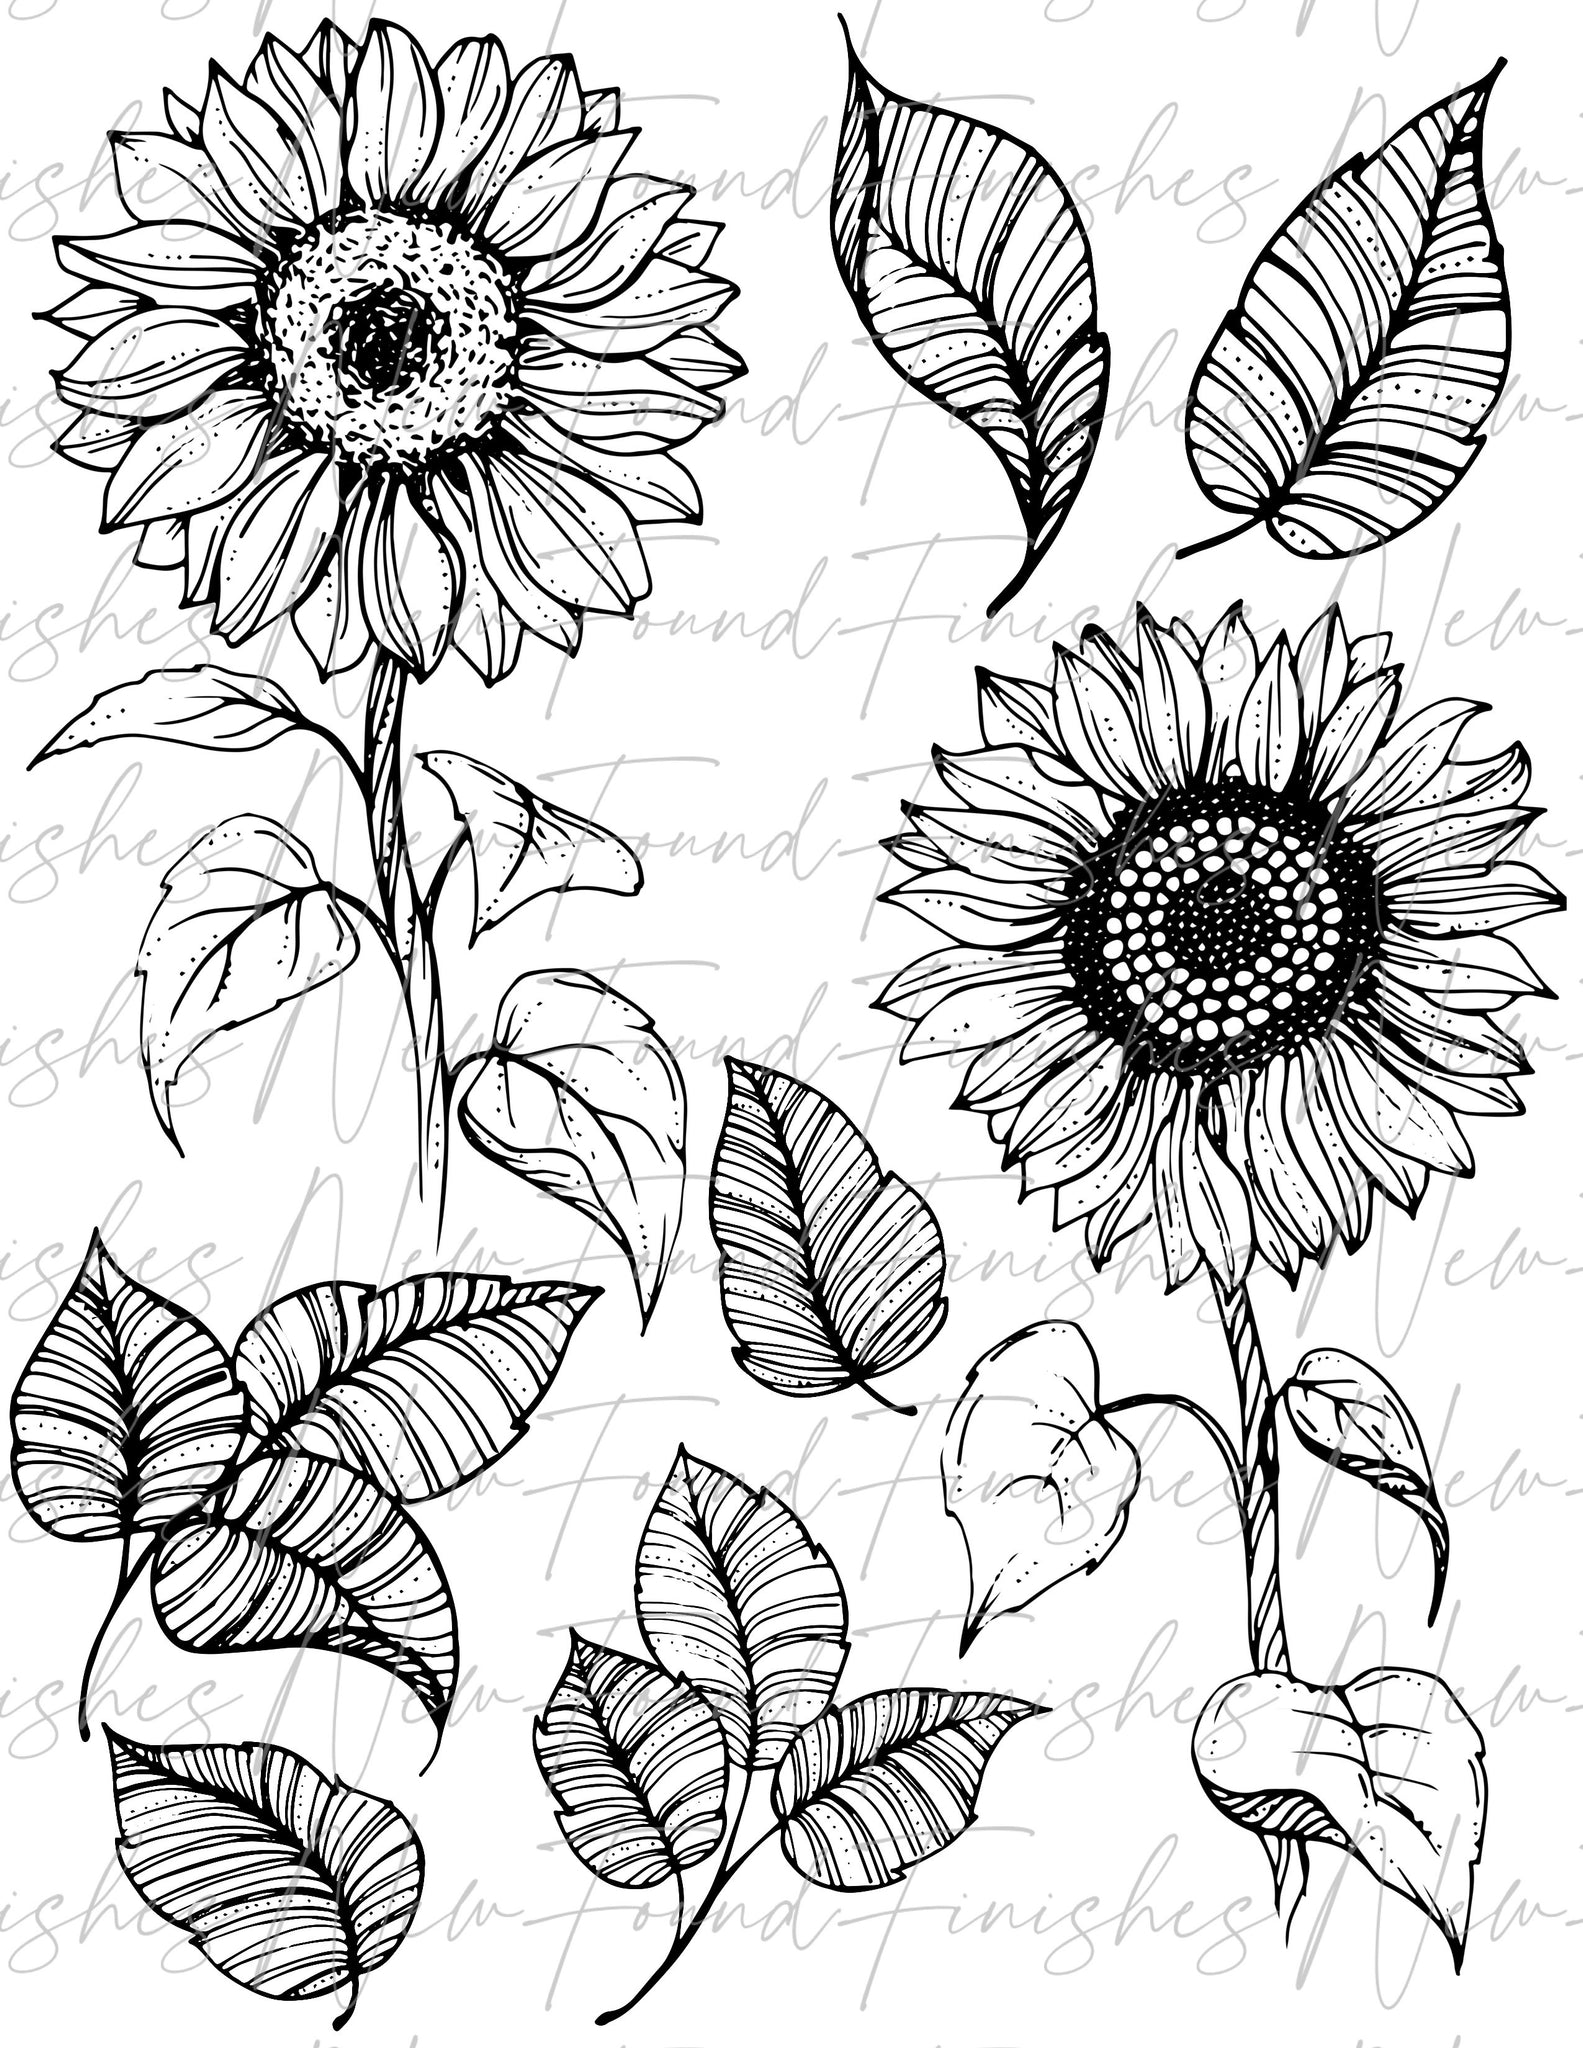 Sunflower line drawing 1 DARK